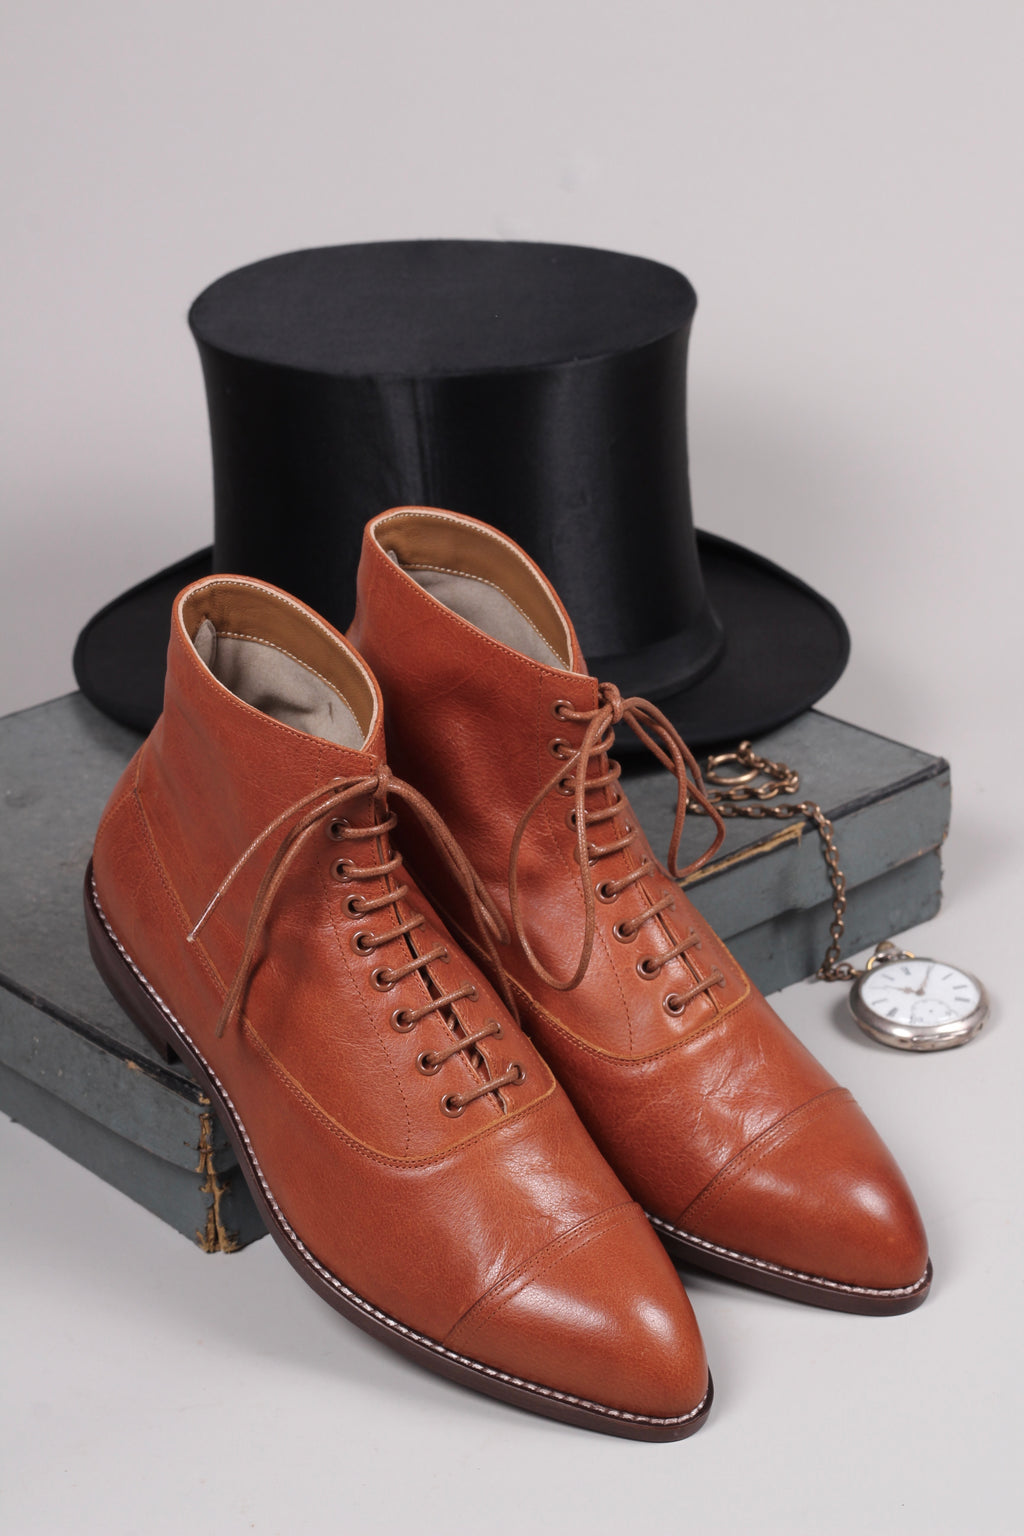 Edwardian 1910 /1920 style læder ankel herrestøvle  - Cognac brun - William